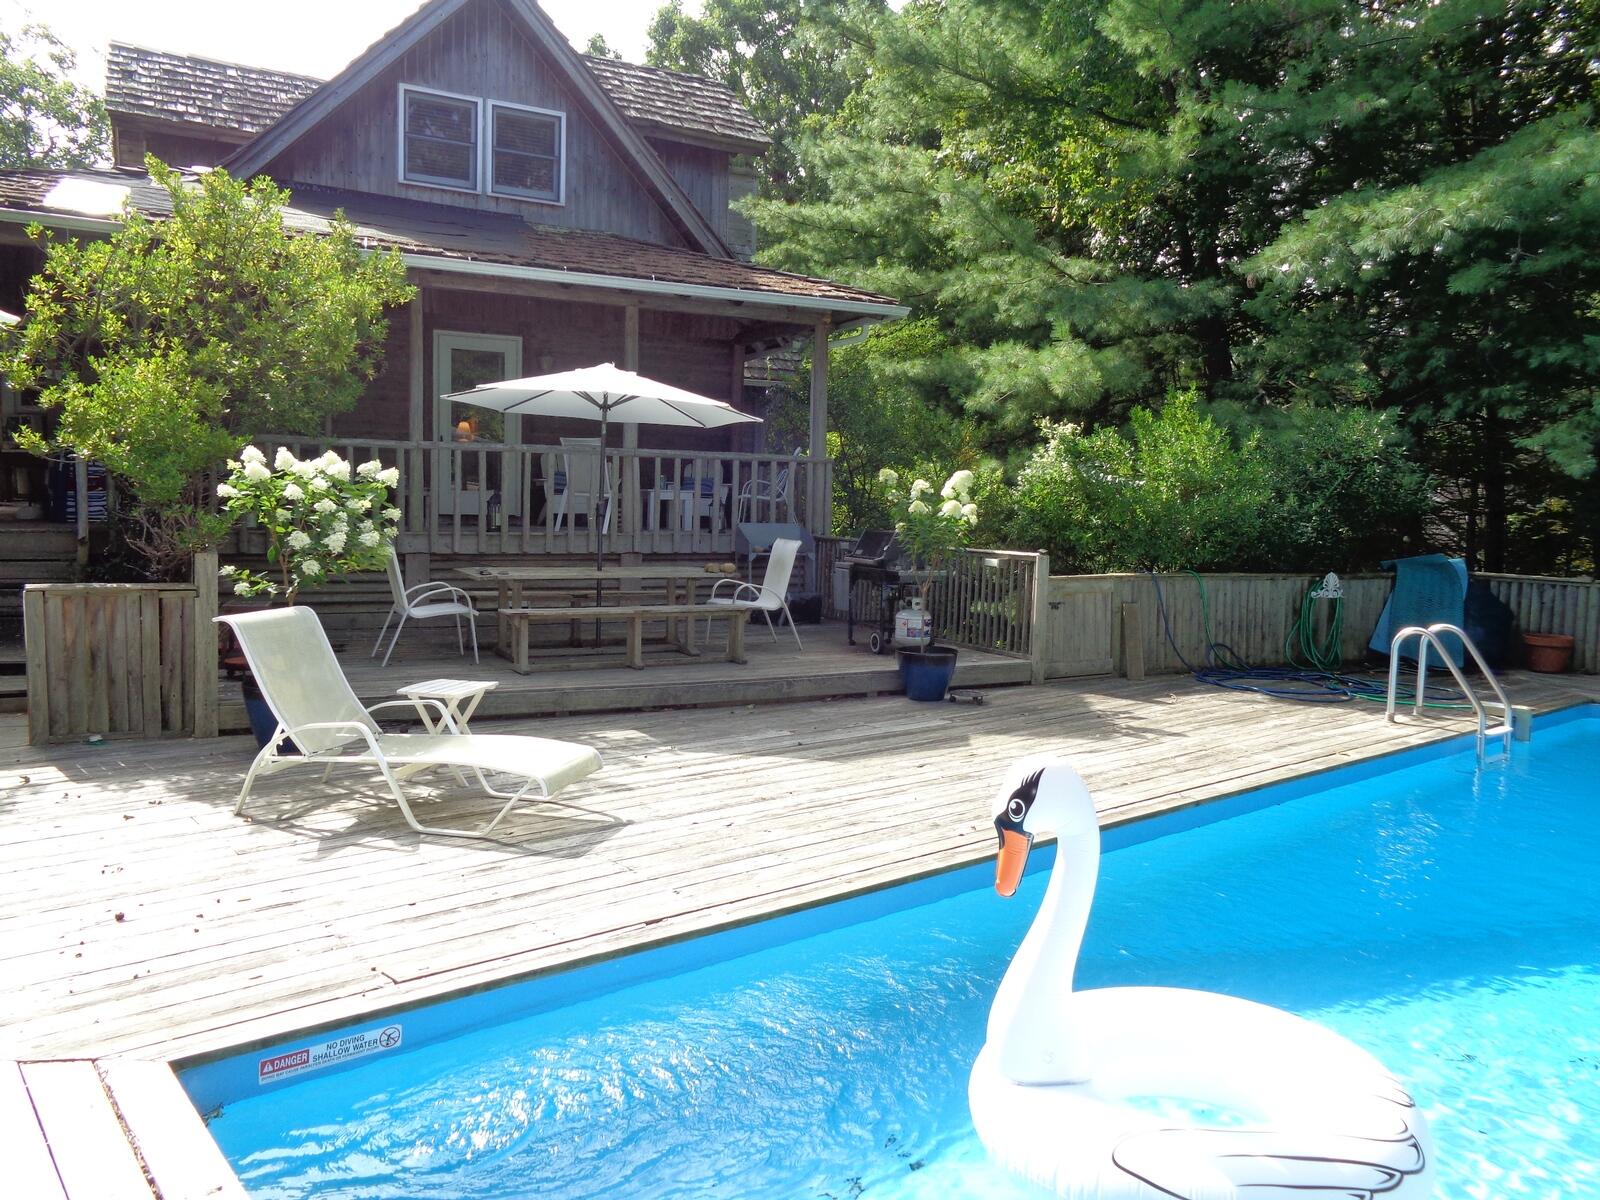 Rental Property at Springs, Springs, Hamptons, NY - Bedrooms: 3 
Bathrooms: 2.5  - $10,000 MO.